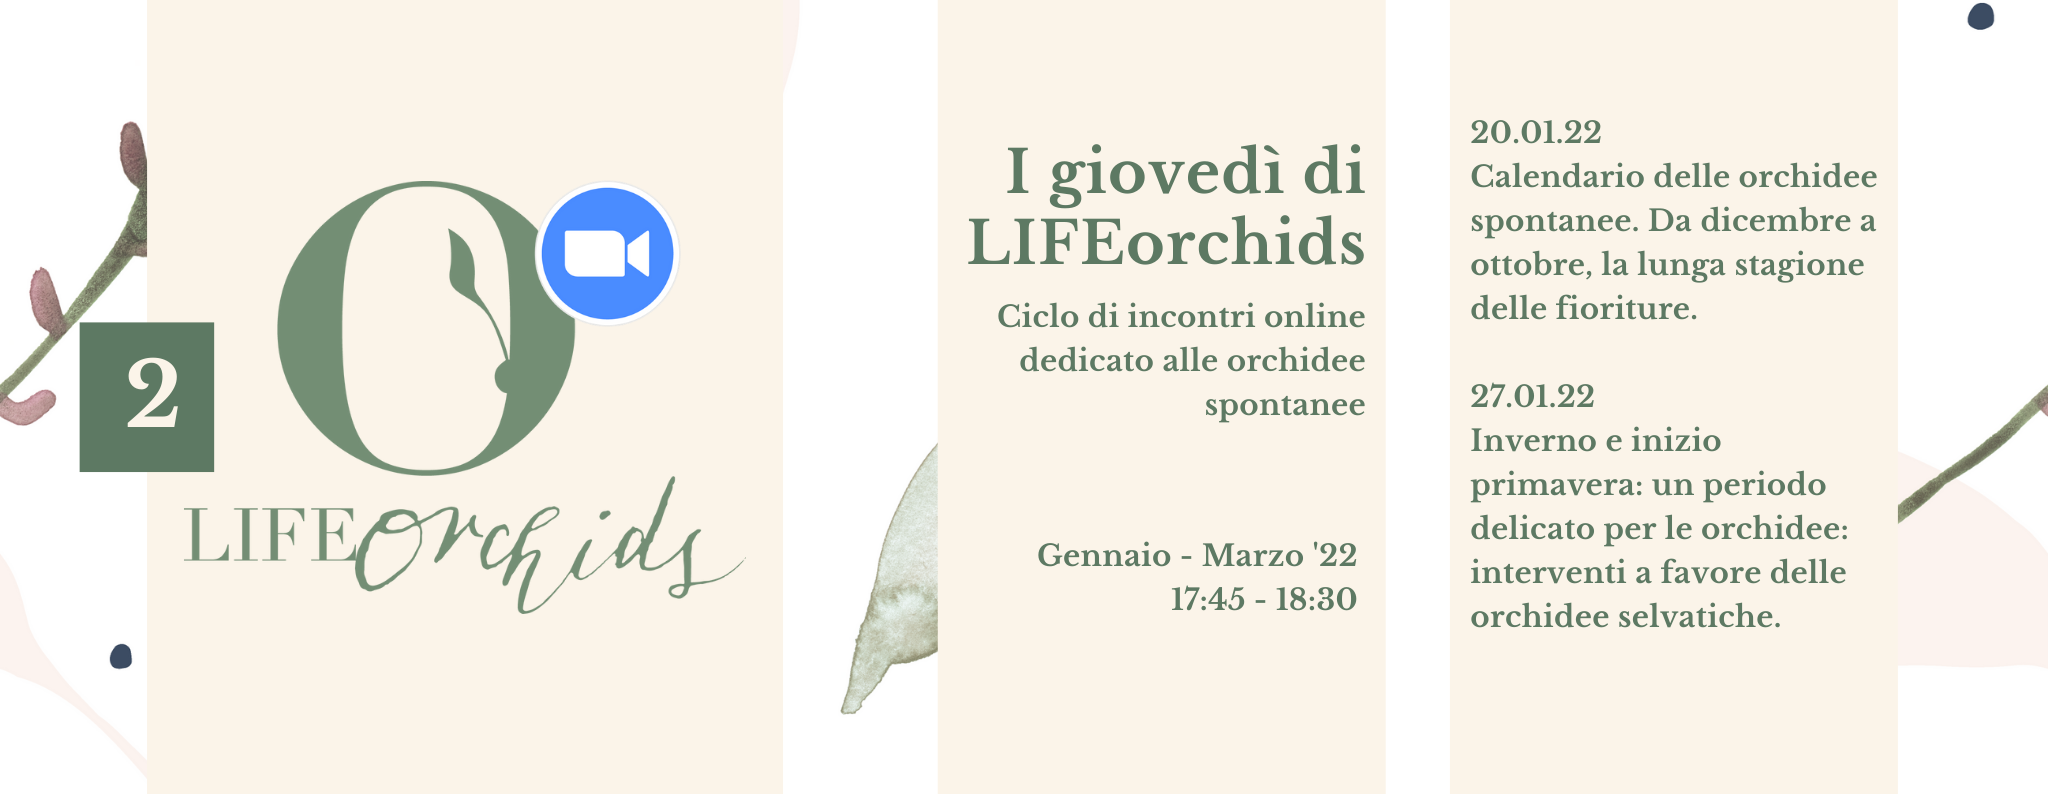 lifeorchids-locandina-giovedi-gennaio-22